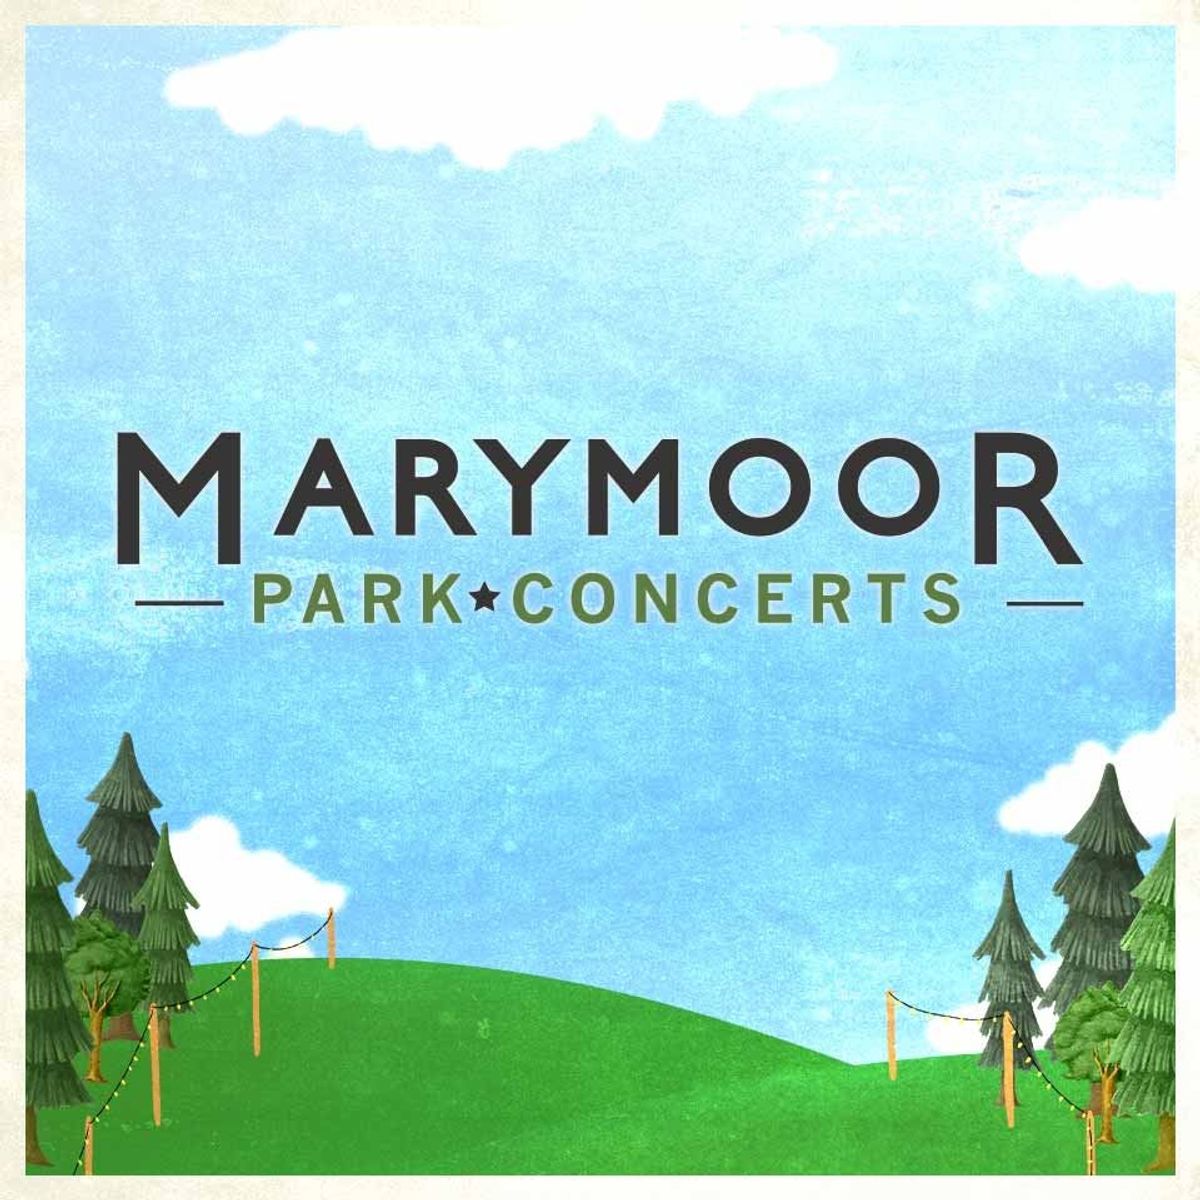 Marymoor Park Concerts 2022 at Marymoor Park in Redmond, WA Multiple